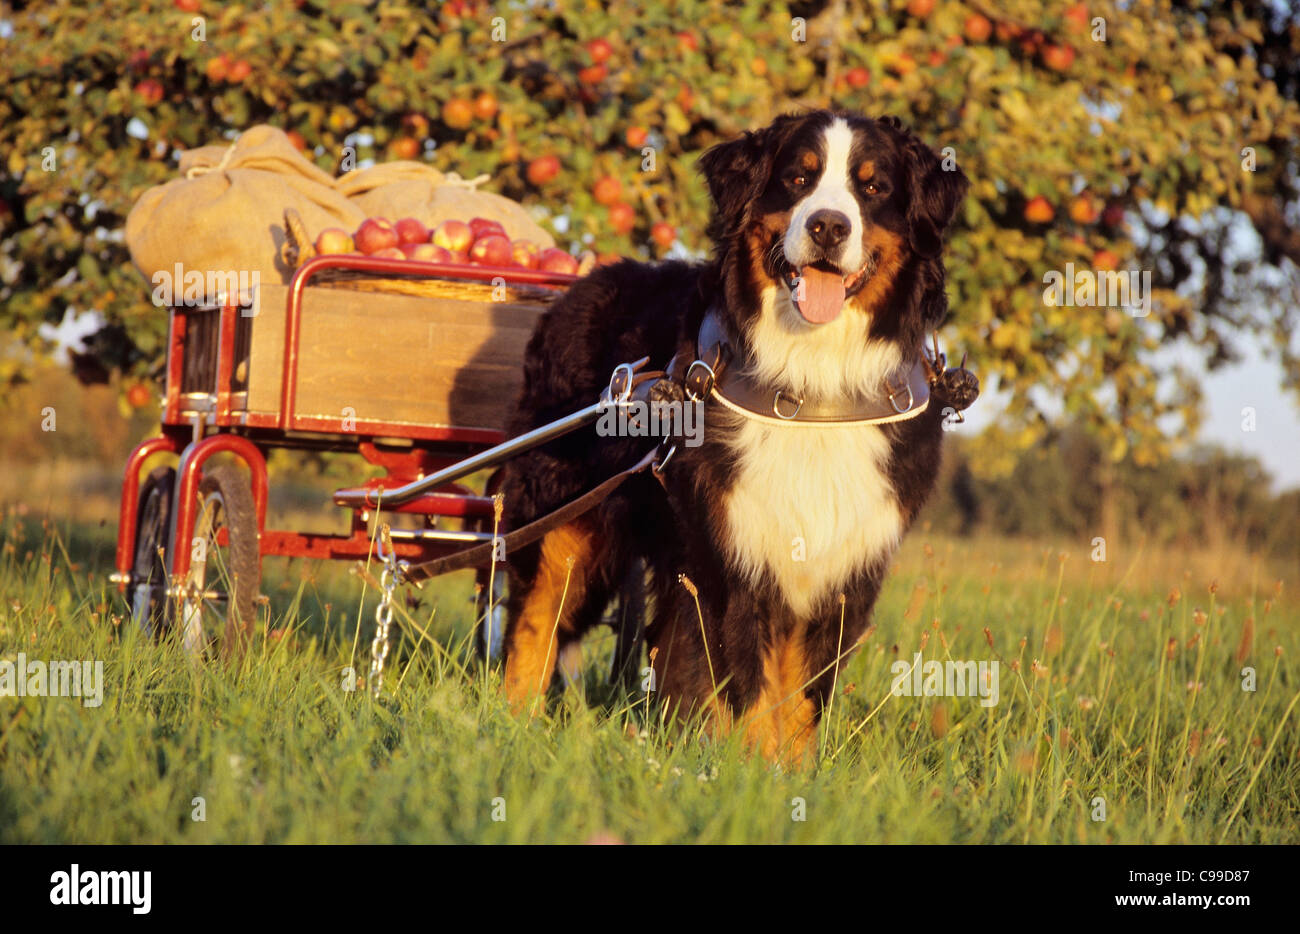 Dog-drawn 'carriage' stirs up social media